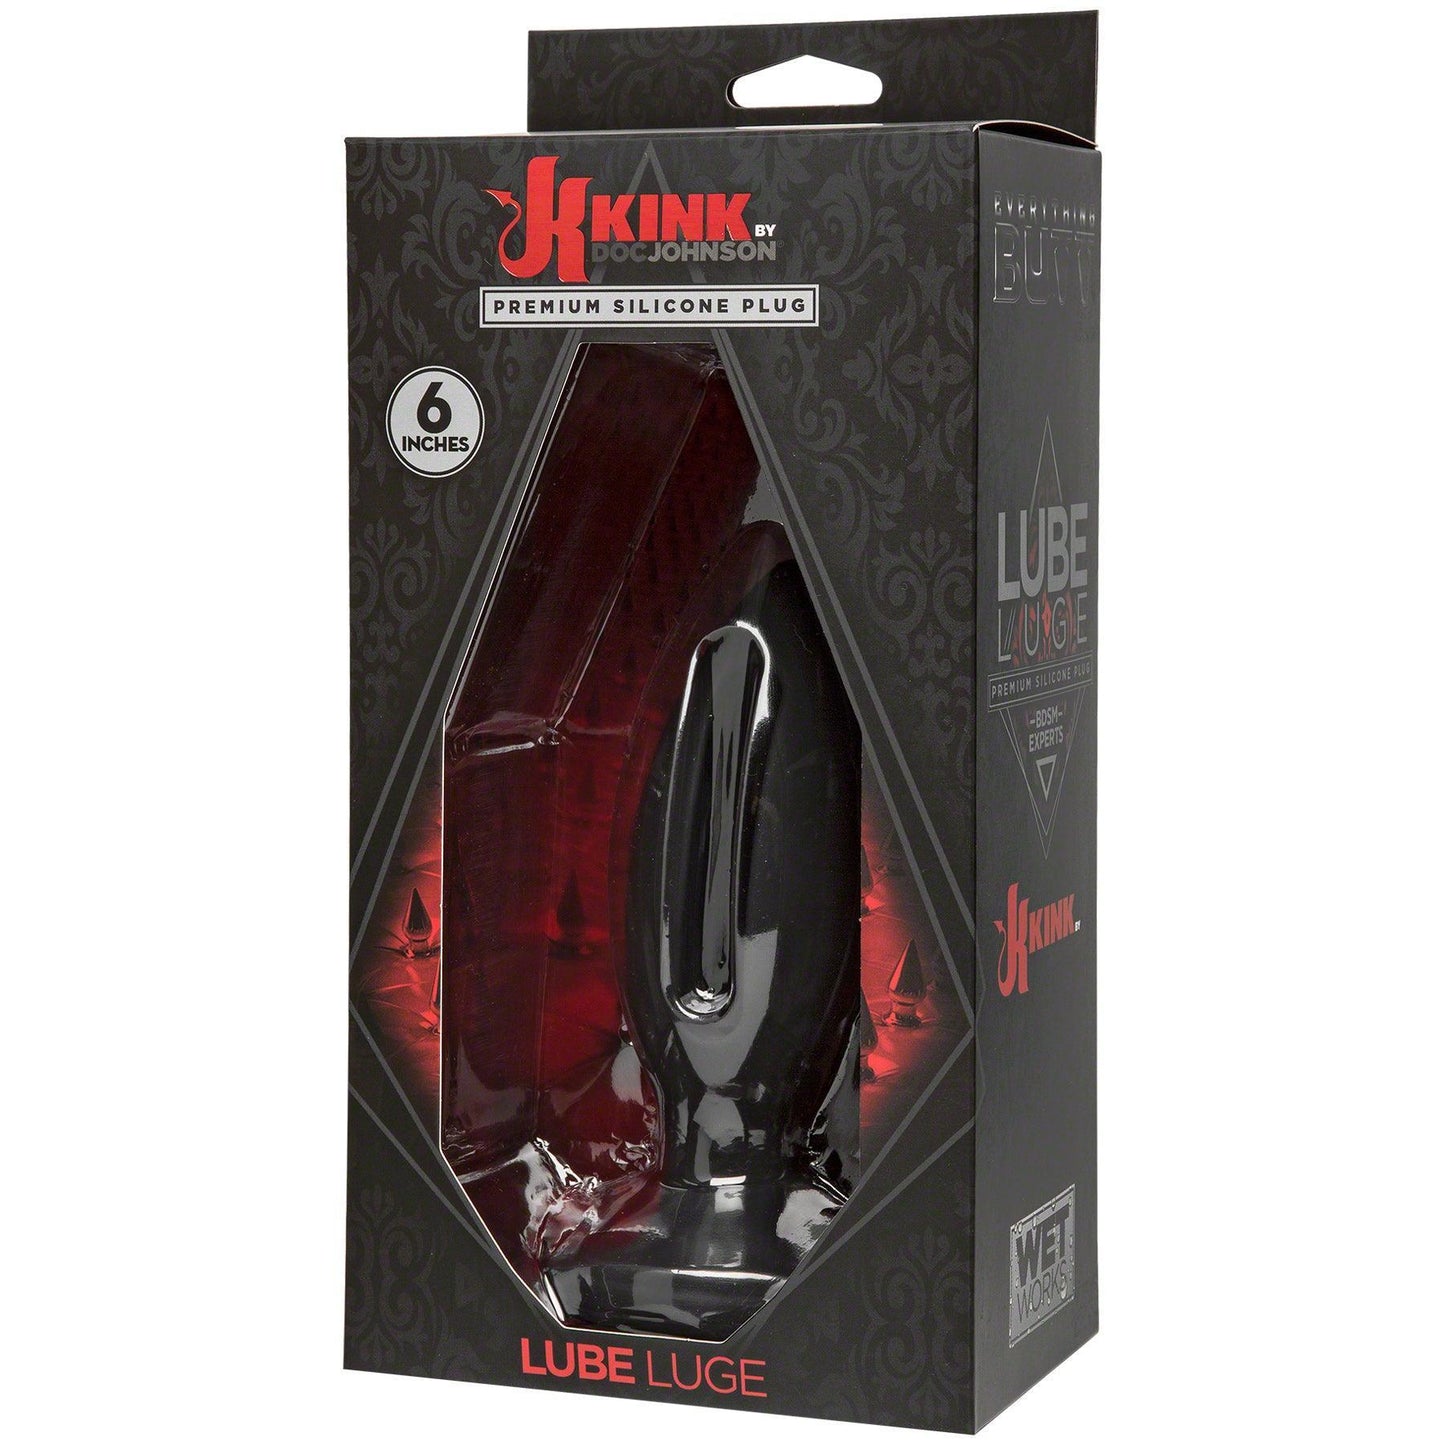 Wet Works - Lube Luge - Premium Silicone Plug - 6 Inch - Black - My Sex Toy Hub